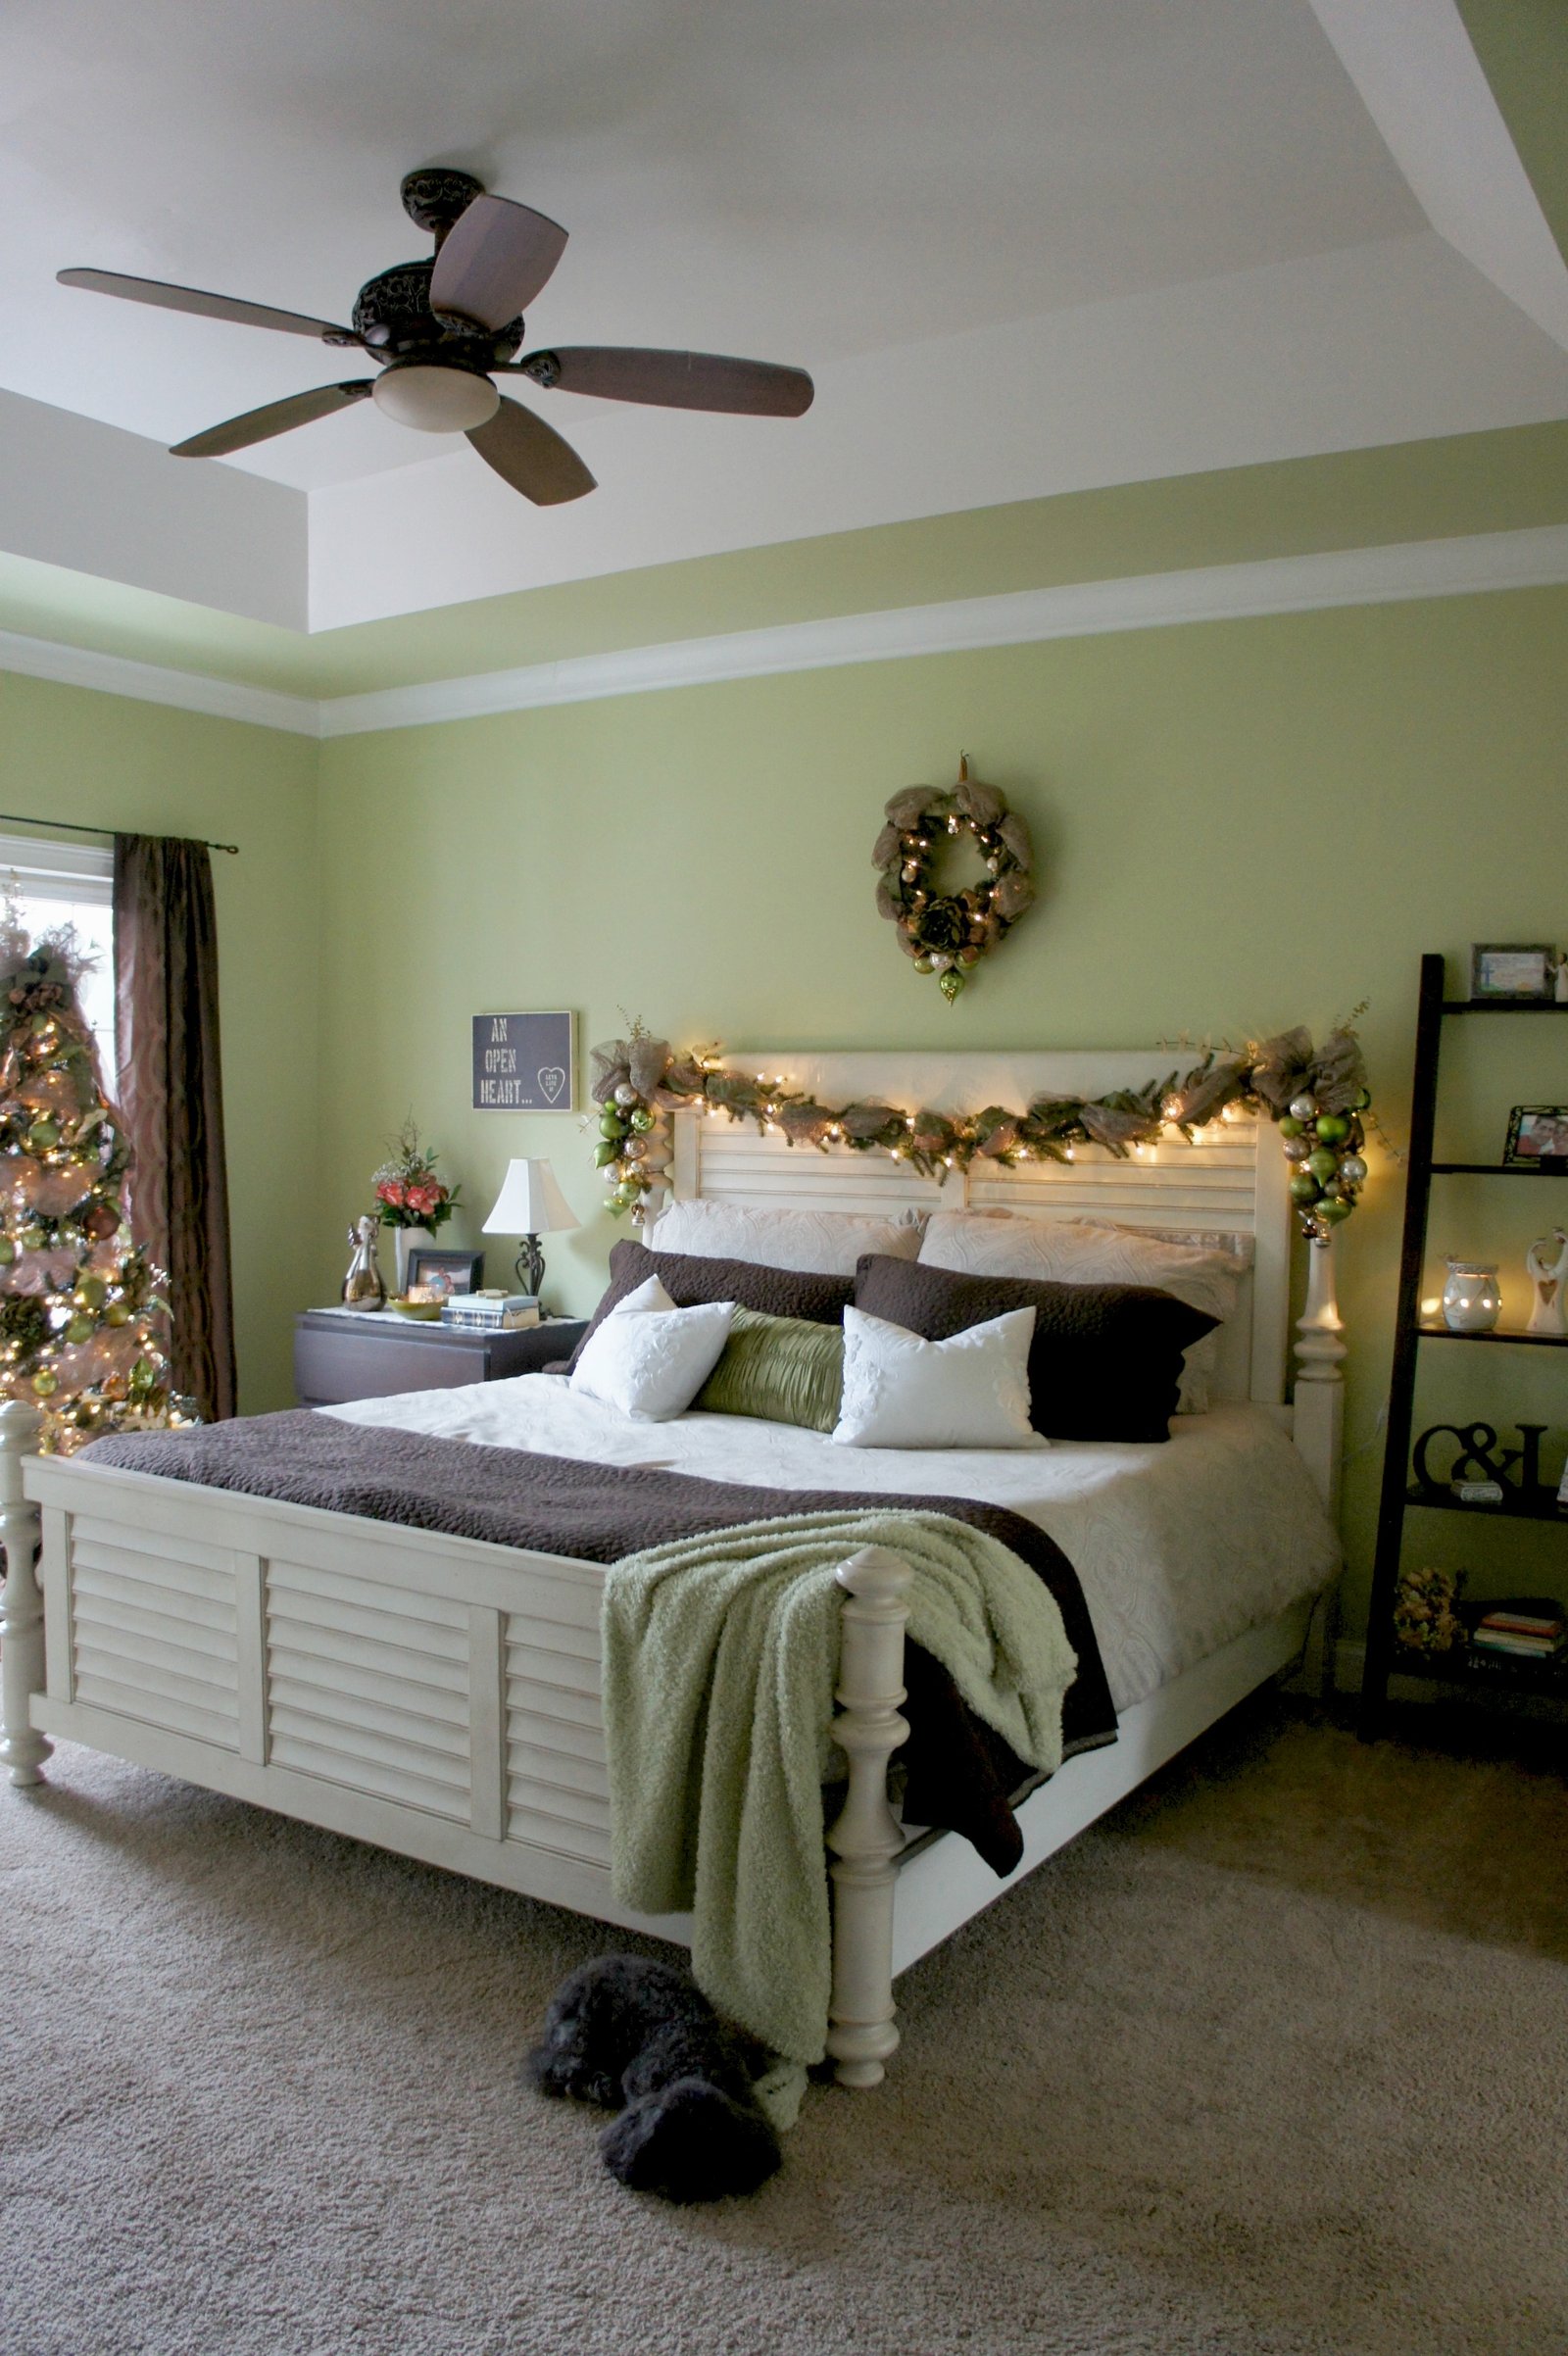 Bedroom Decor Ideas Images : Bedrooms Storiestrending Country Freshsdg ...